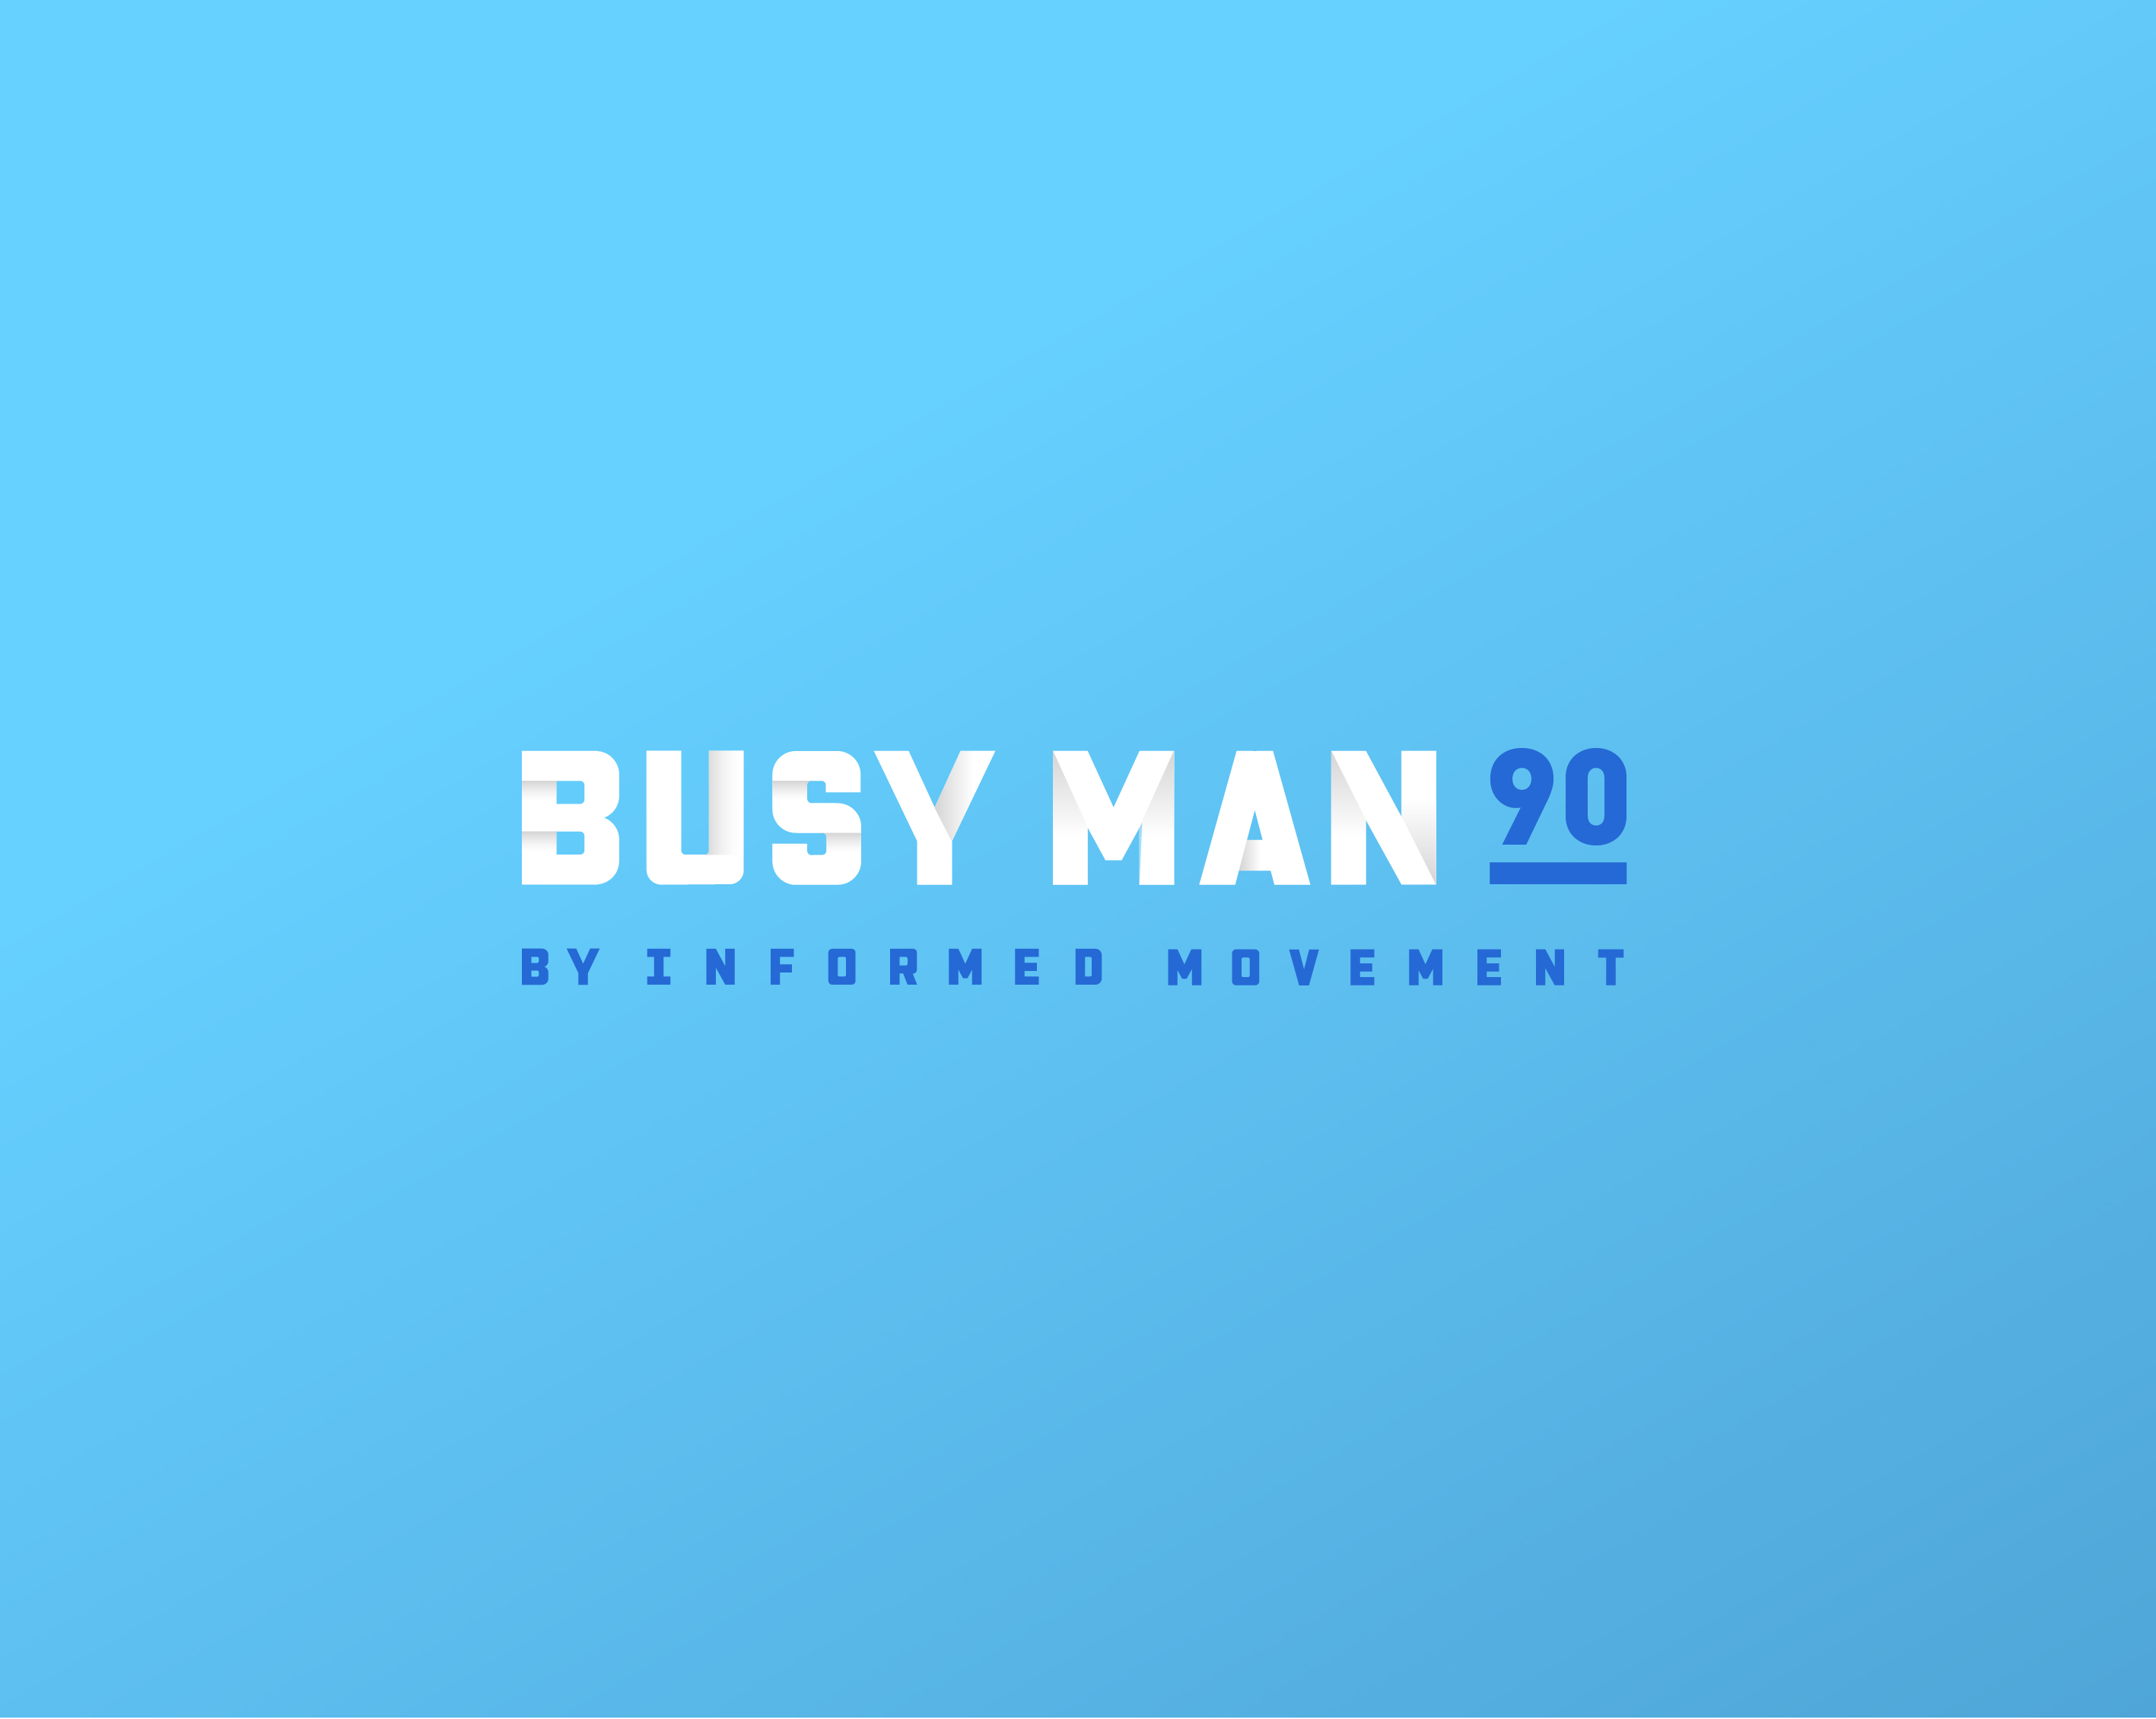 Busy man 90 main logo on teal